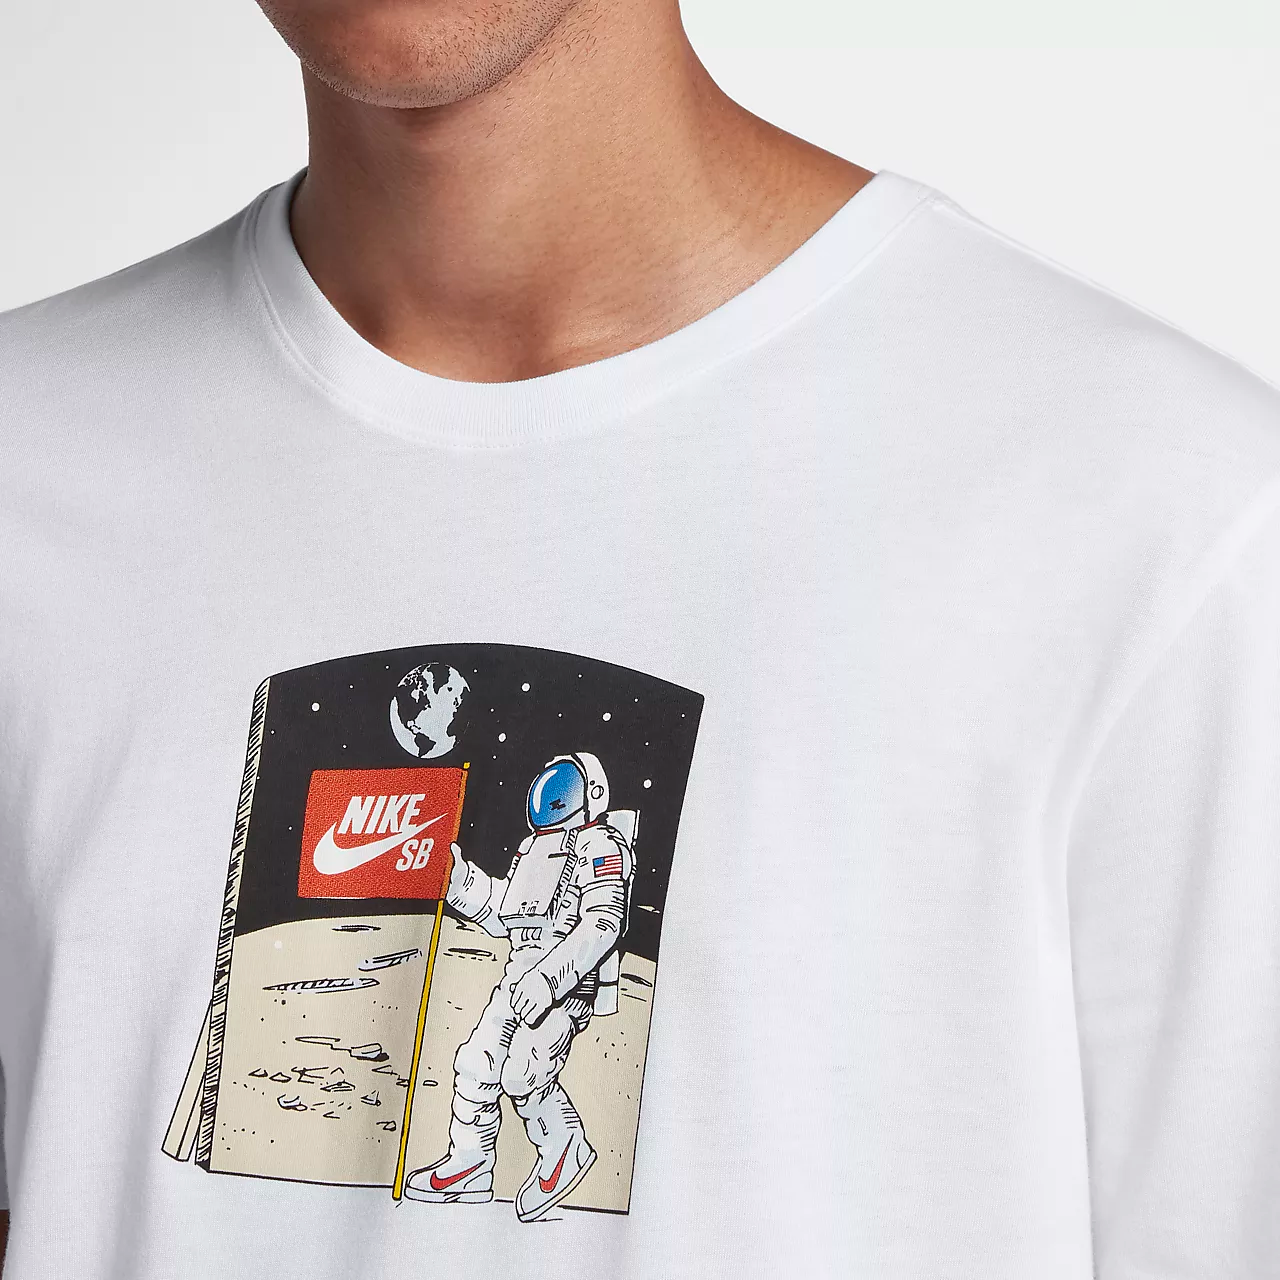 sb-mens-skateboarding-t-shirt-g81350.png